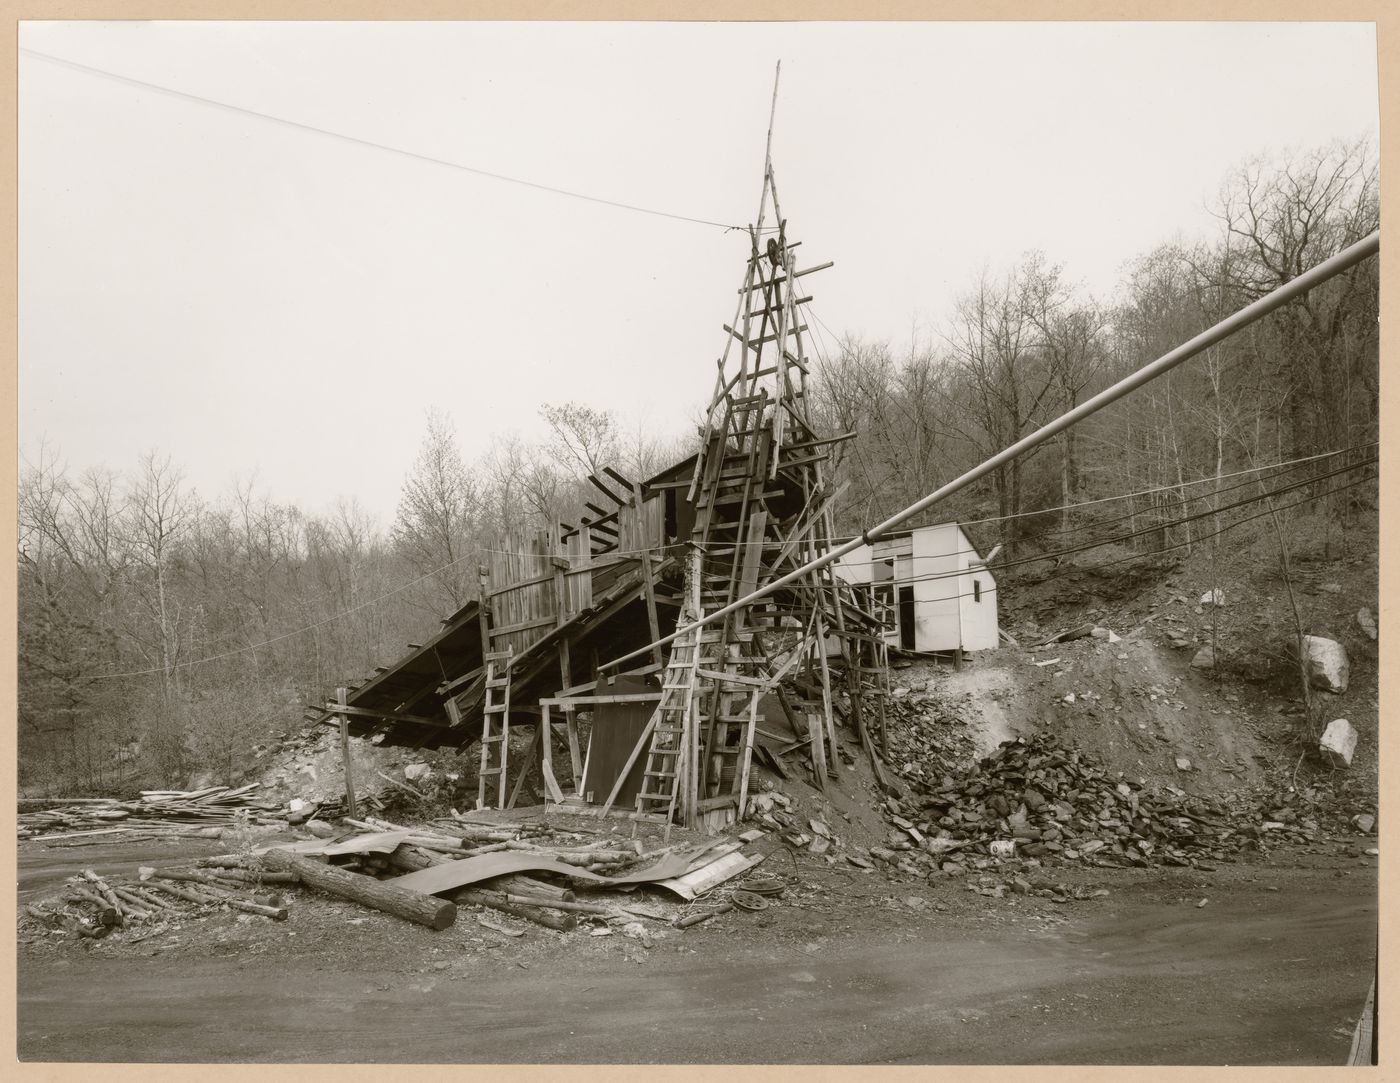 View of a coal mine tipple of S & T Coal Co. mine, Bear Valley, Pottsville, Pennsylvania